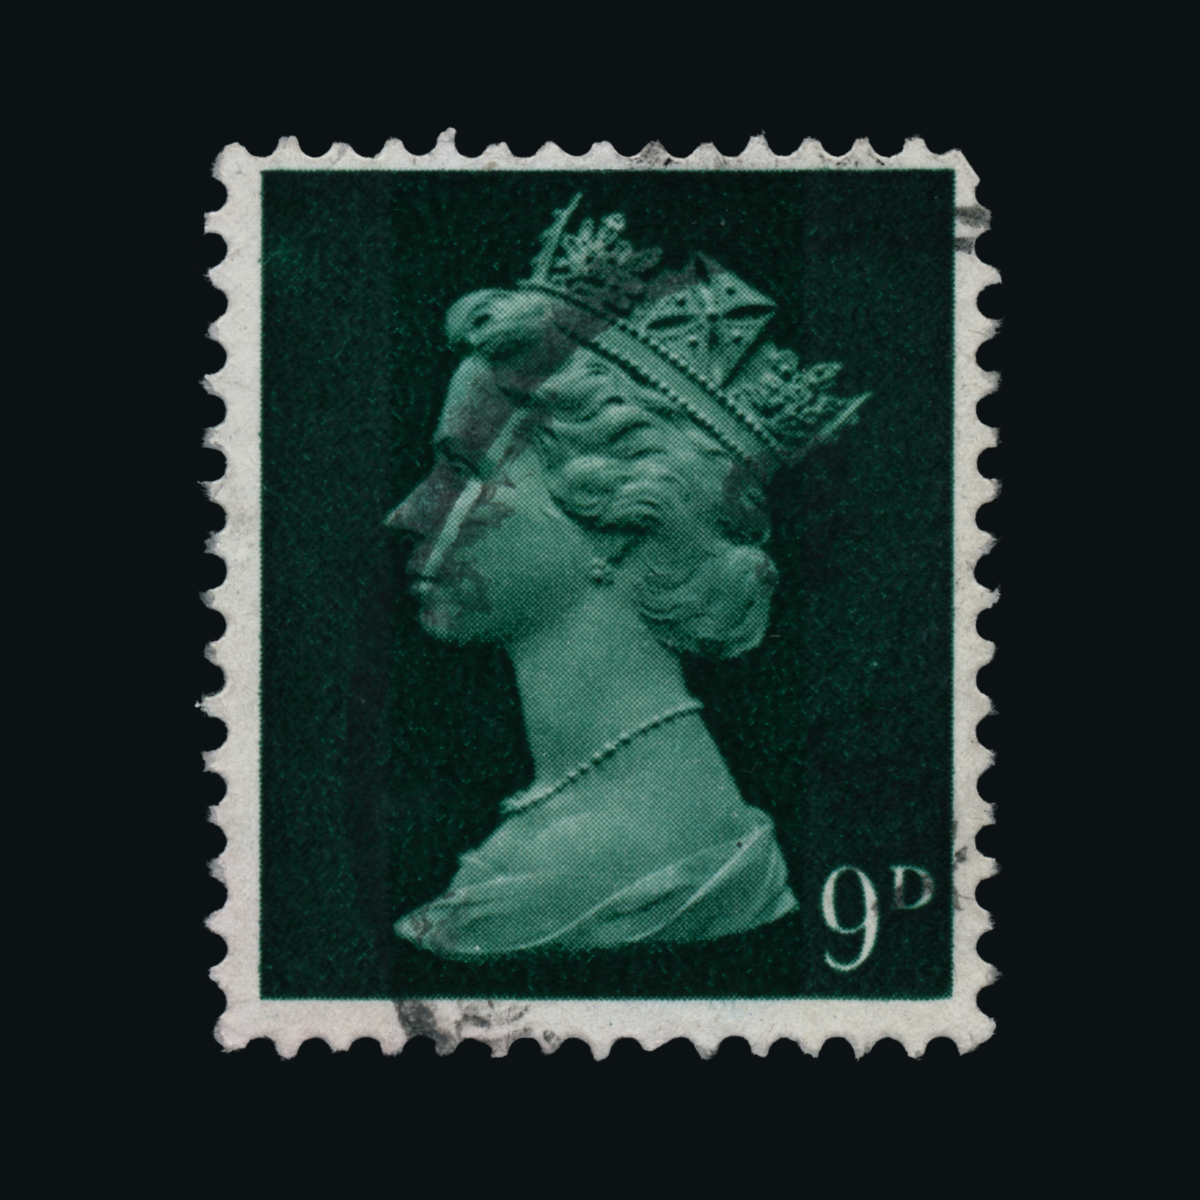 A postage stamp of Queen Elizabeth II